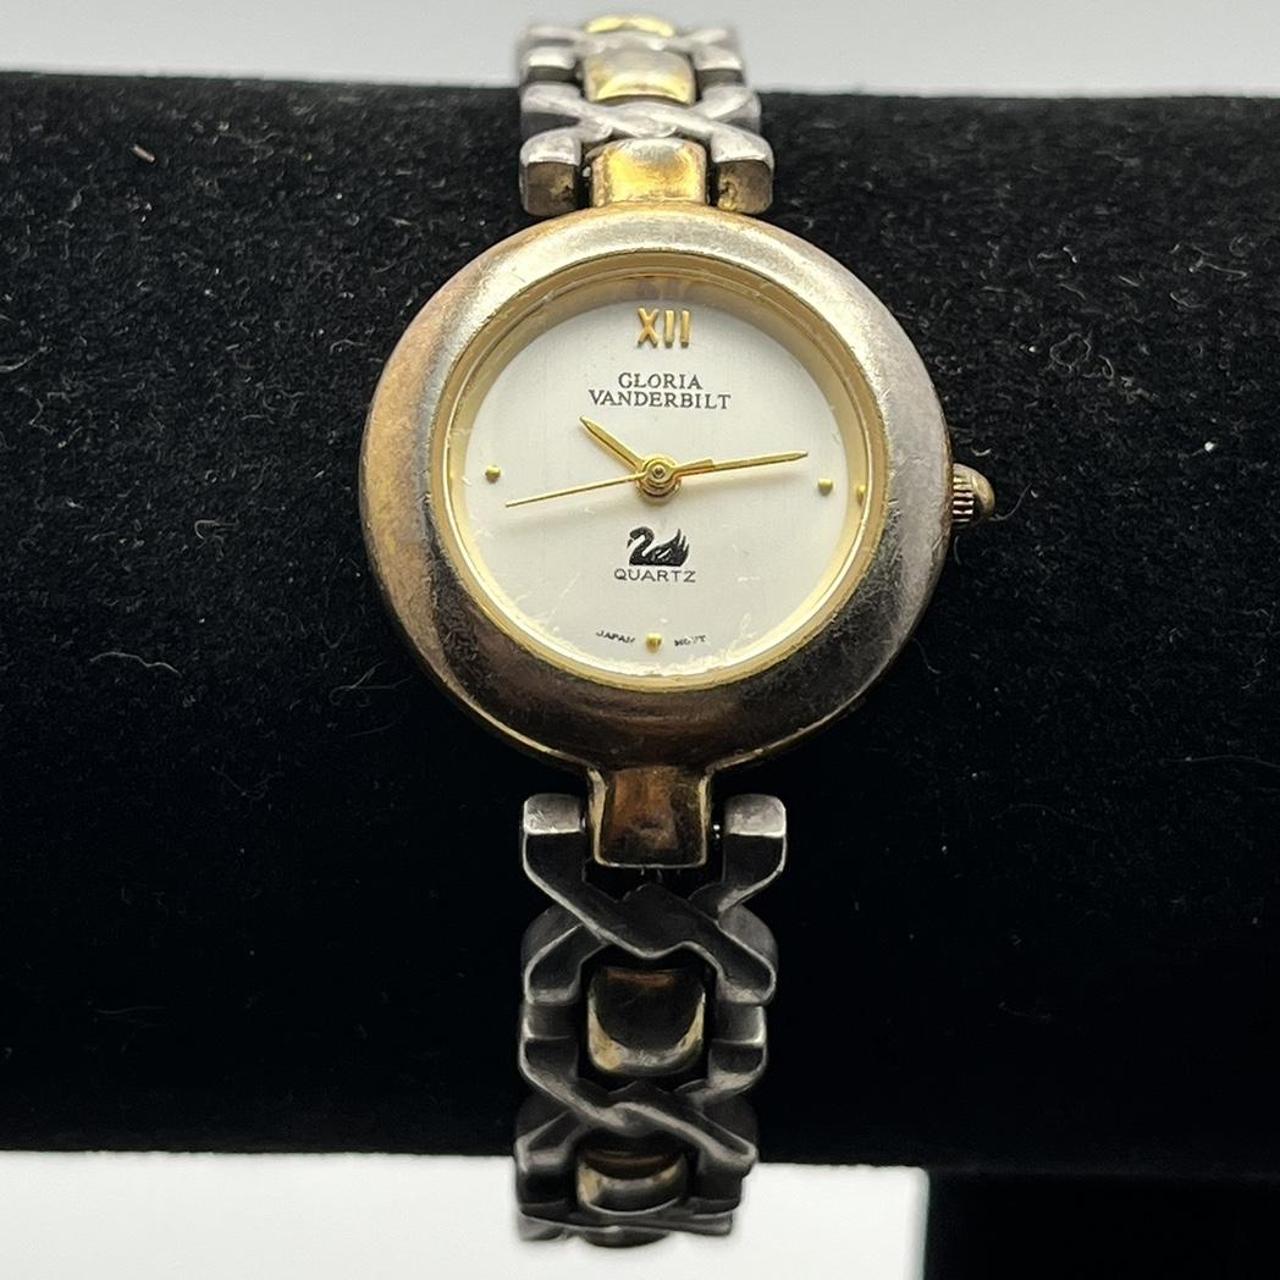 Sold at Auction: Gloria Vanderbilt Quartz Wrist Watch